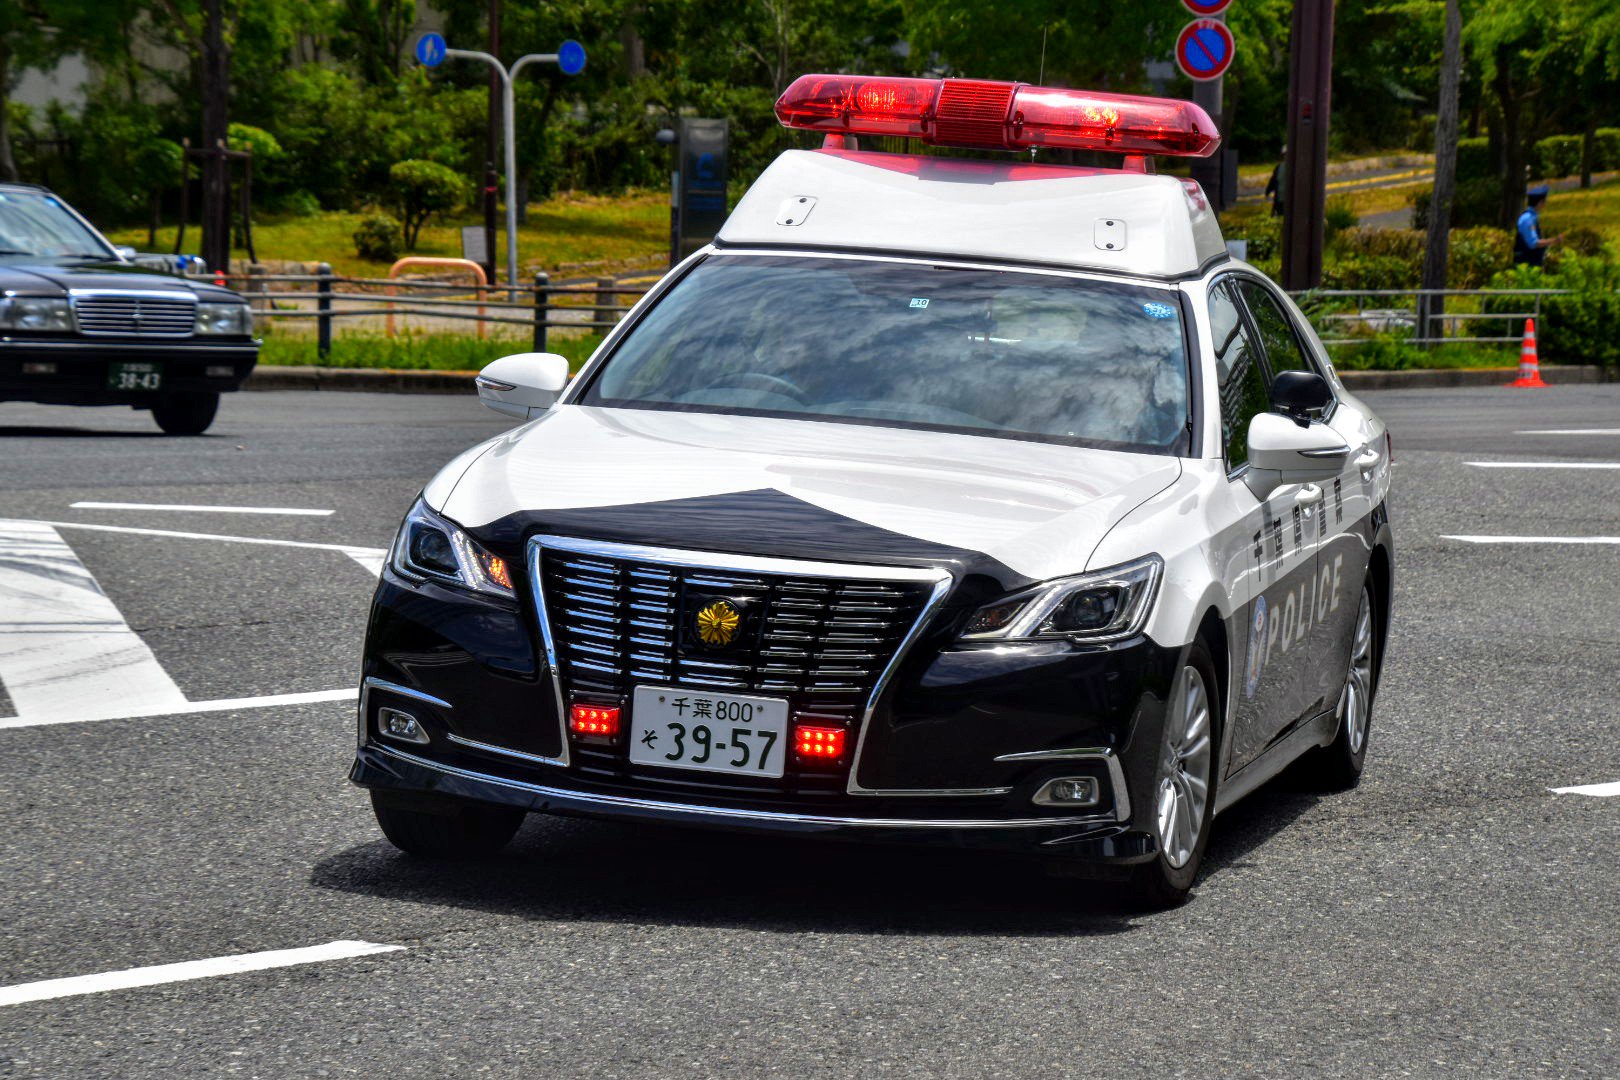 Mf10l33 No Twitter 千葉県警本部 自動車警ら隊 210クラウン警ら車 千葉7 G大阪でインテックス大阪周辺を警らしていました 千葉は交パや警護車等も持ち込んでいましたが この車両は基本単独で警らしていました 鷲 のマークの自ら隊